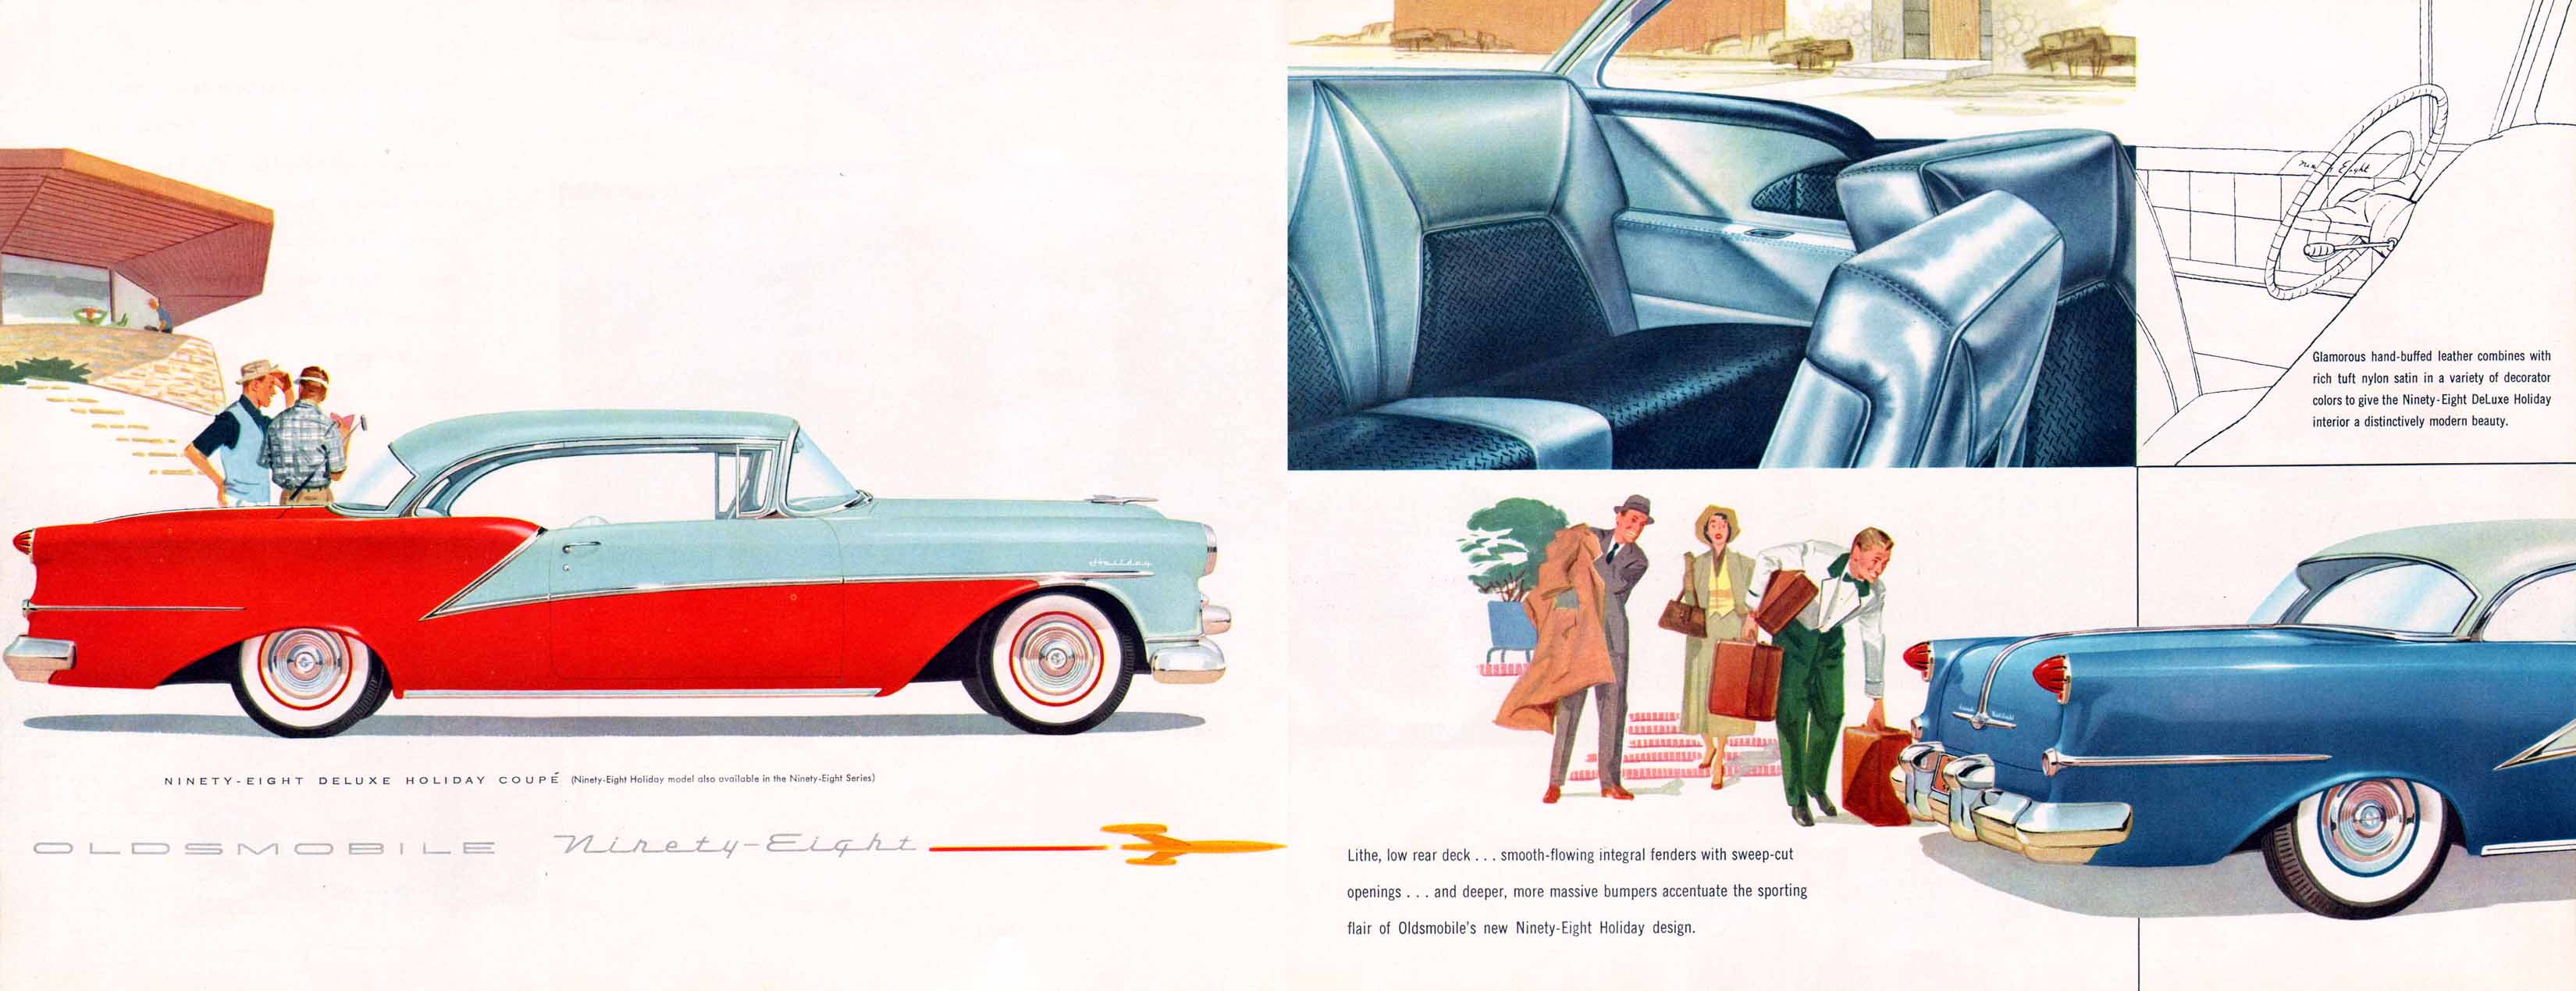 1954 Oldsmobile Motor Cars Brochure Page 1